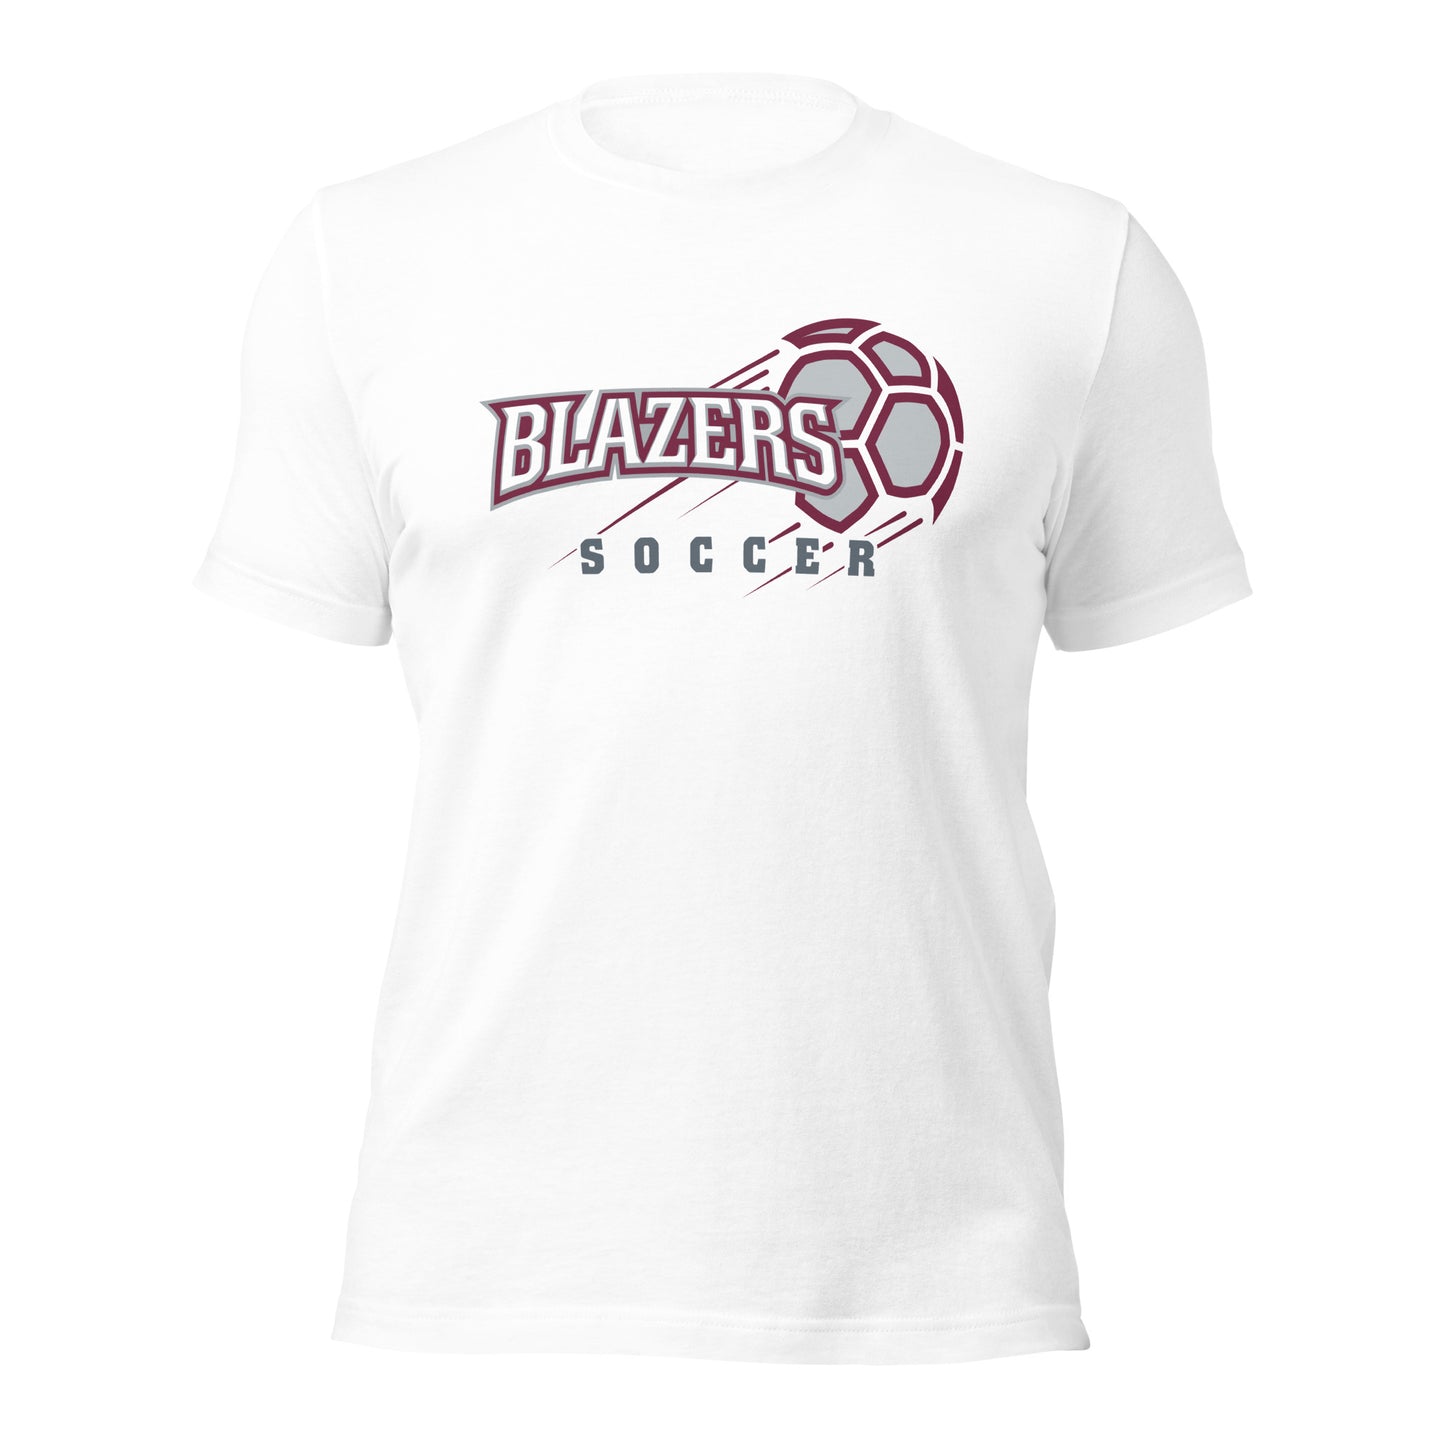 Blazers Soccer Unisex Short-Sleeve T-Shirt Light Colors